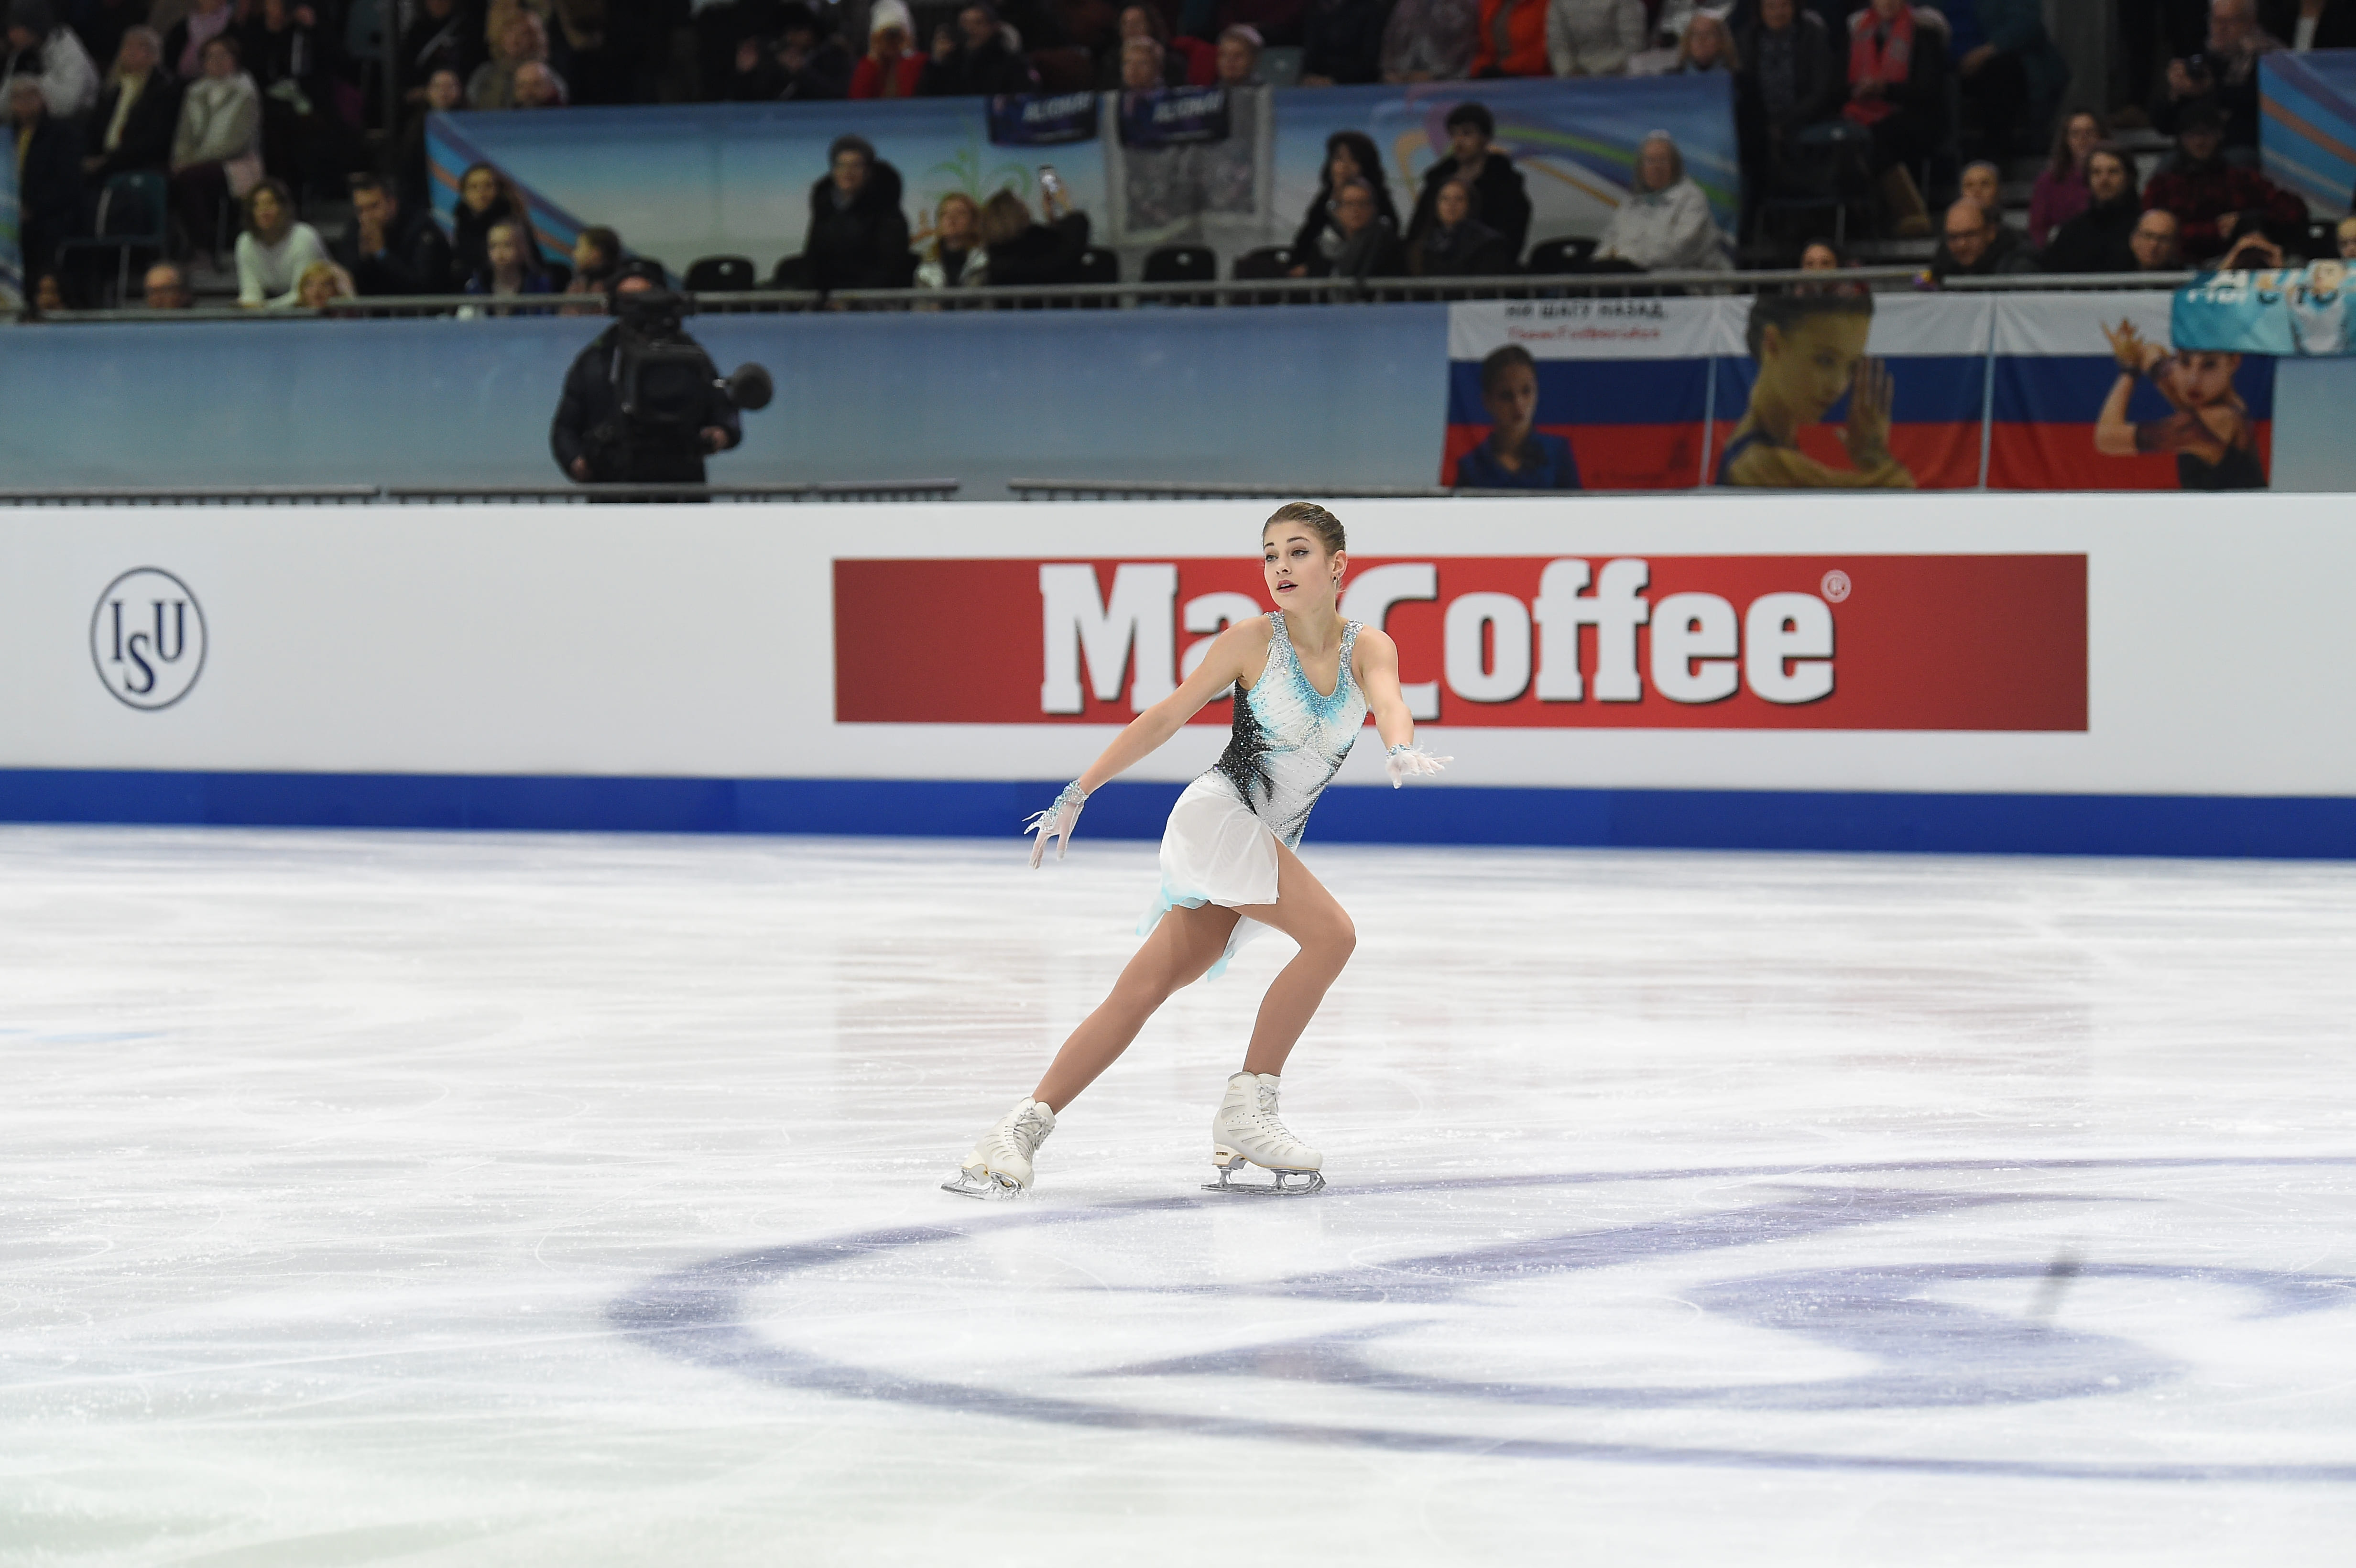 MacCoffee at the European Figure Skating Championship 2020 in Graz